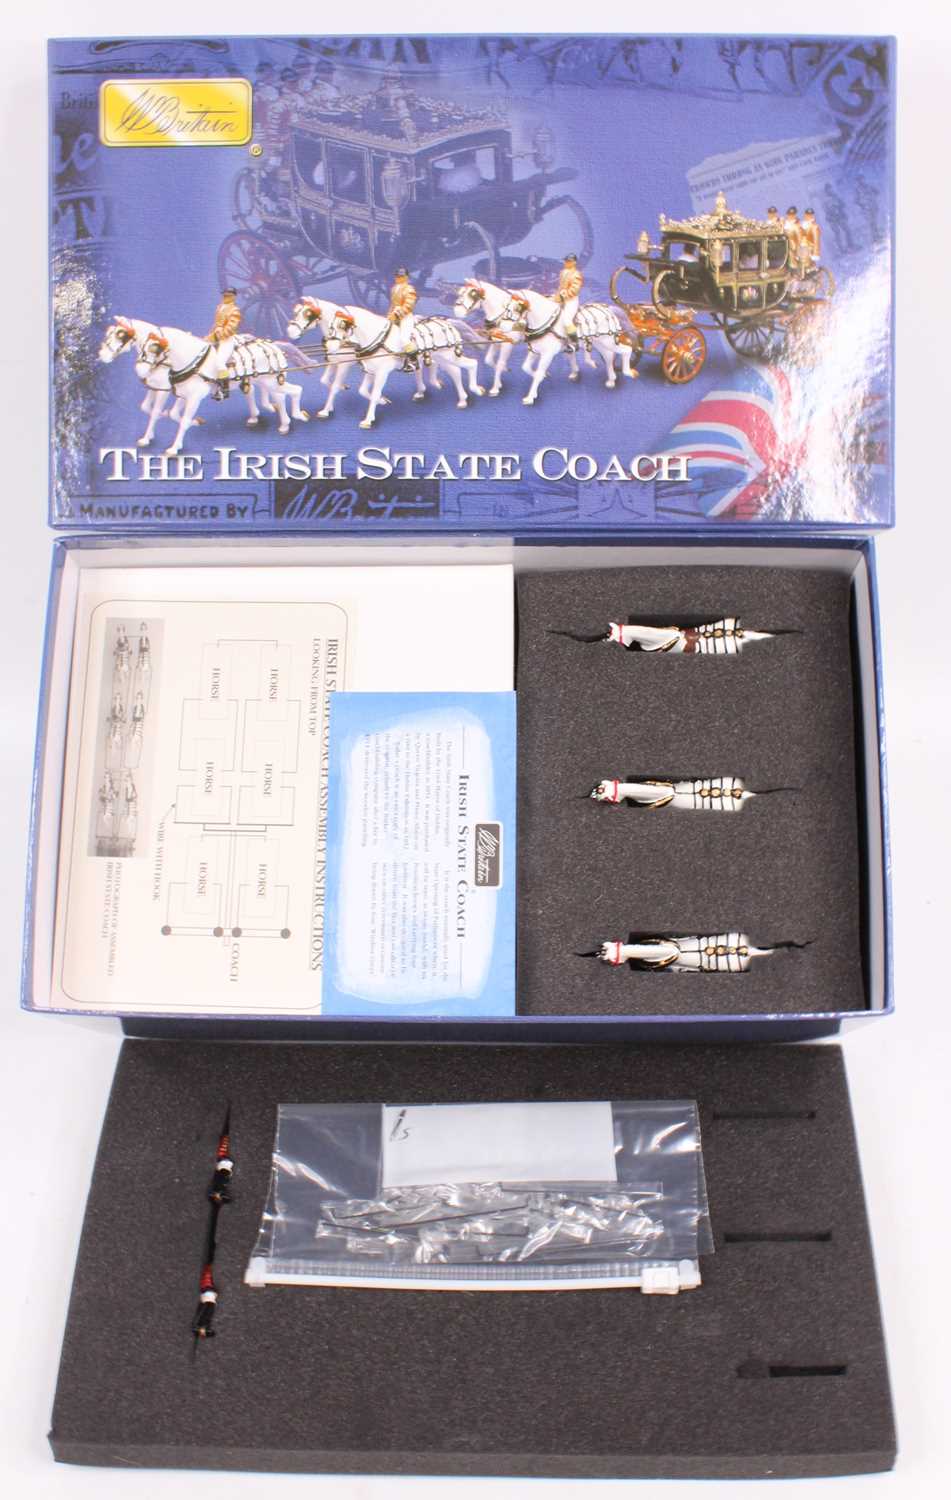 Britains modern release No. 00254 The Irish State Coach box set, in its original foam packed box